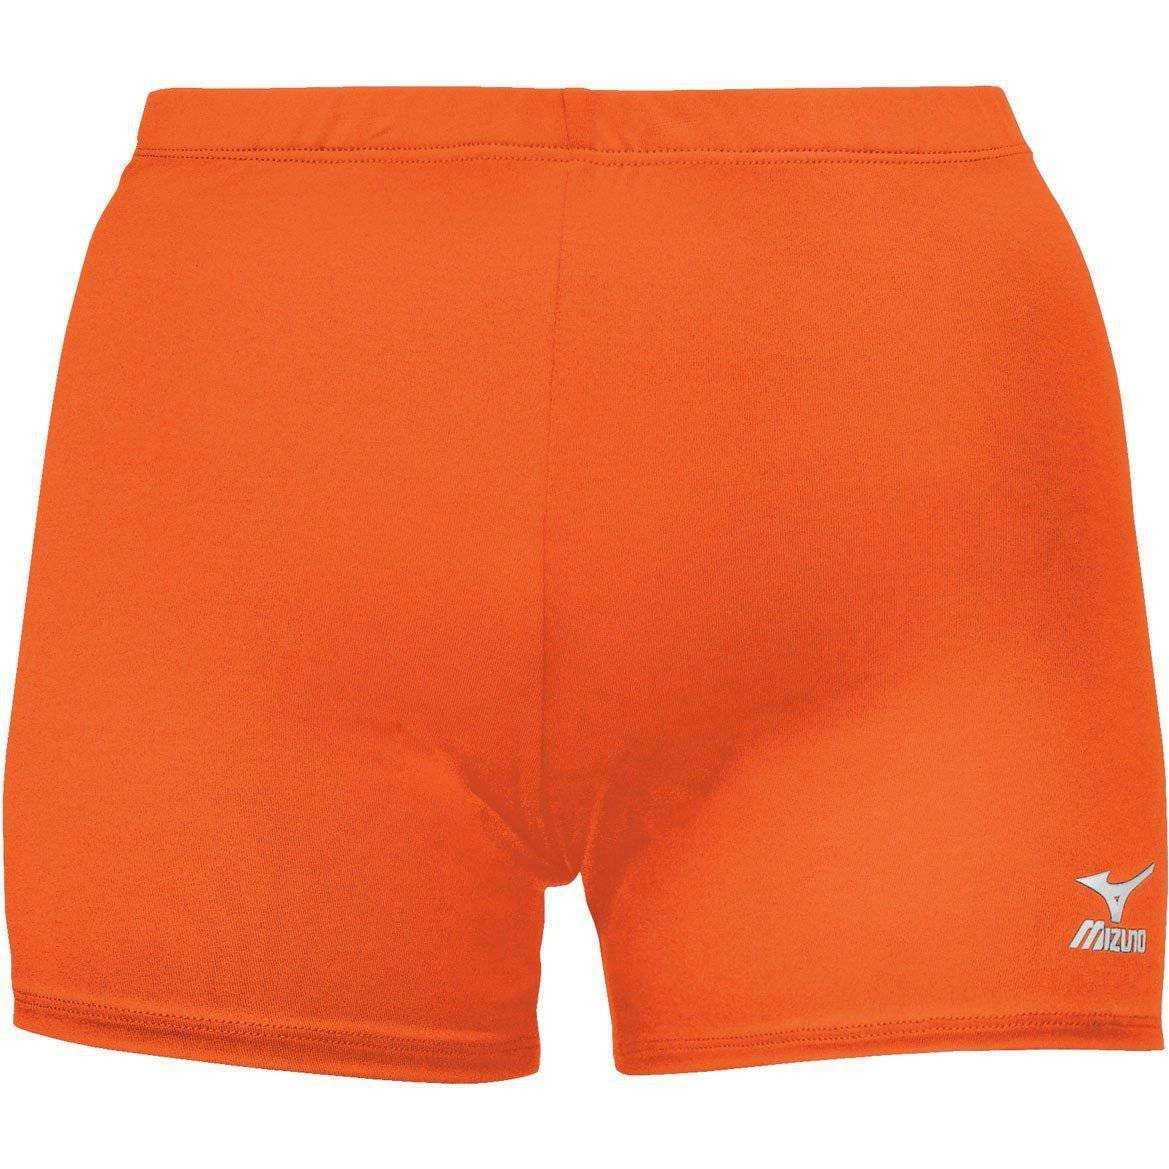 Mizuno Vortex Spandex Short Orange